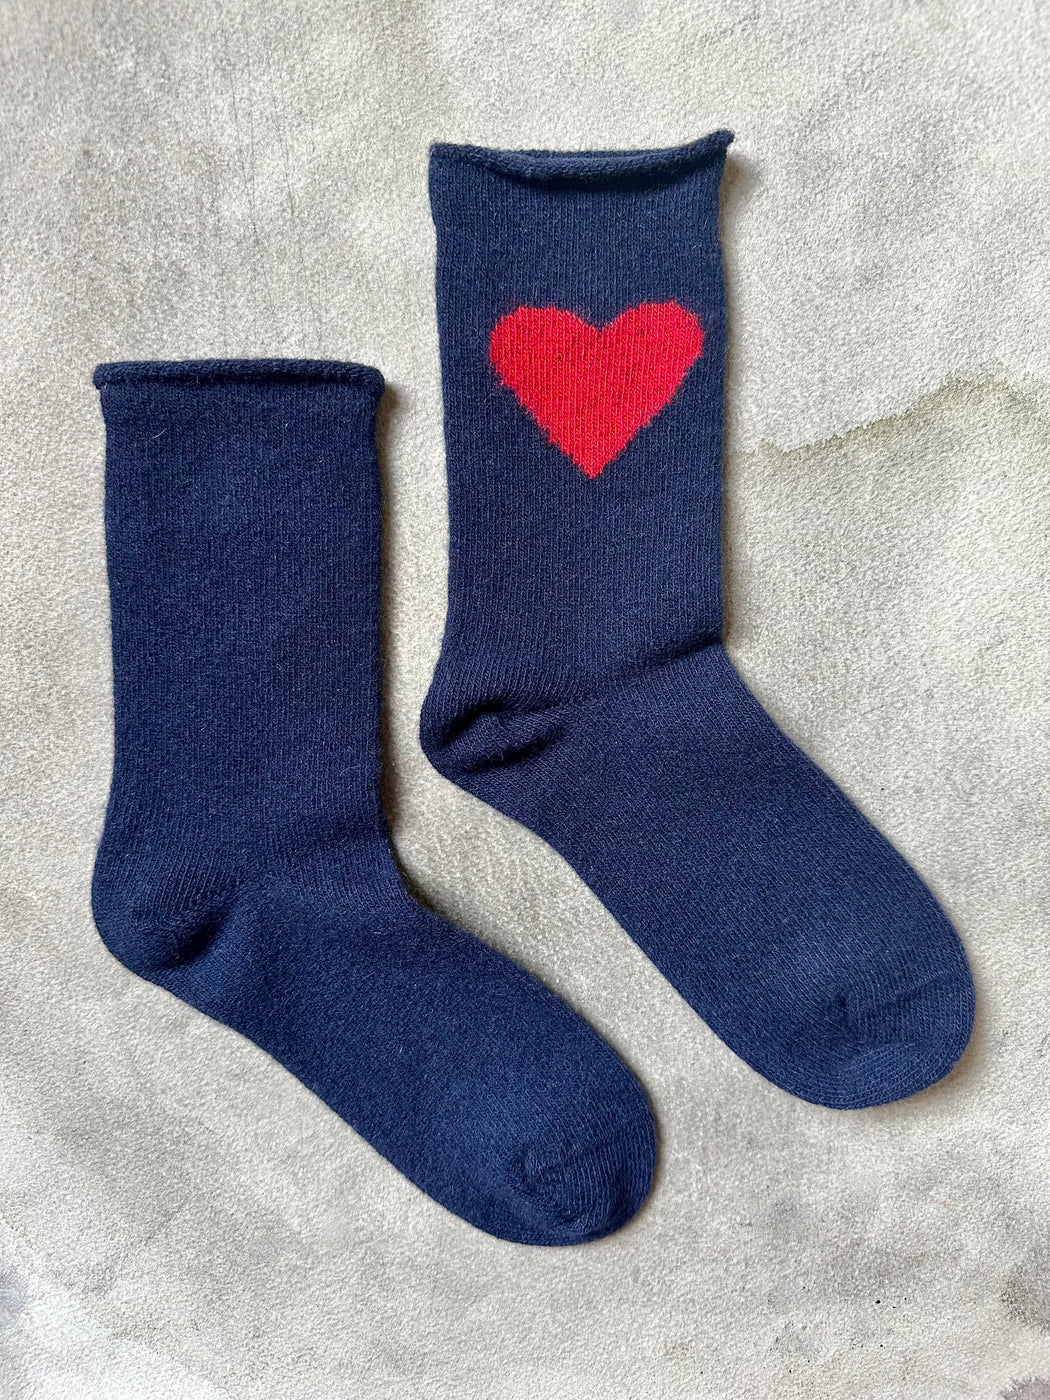 "Love" Socks by Hansel from Basel